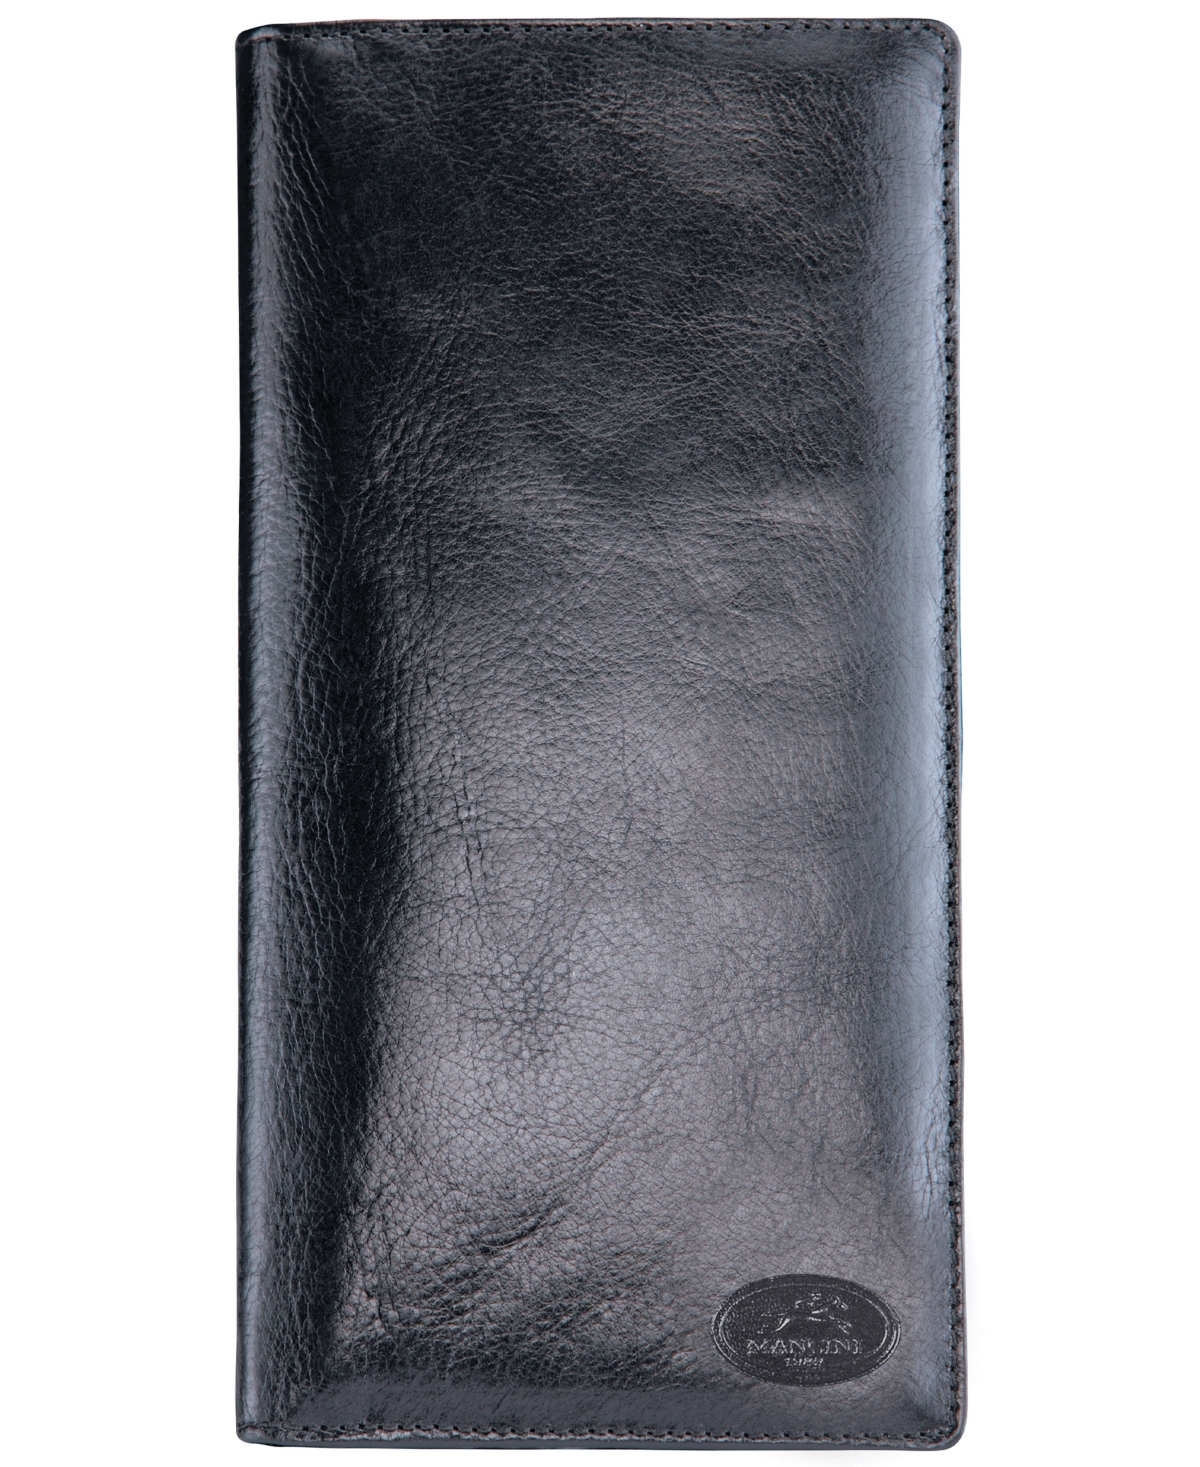 Mancini Men's Equestrian 2 Collection Pocket Wallet In Black